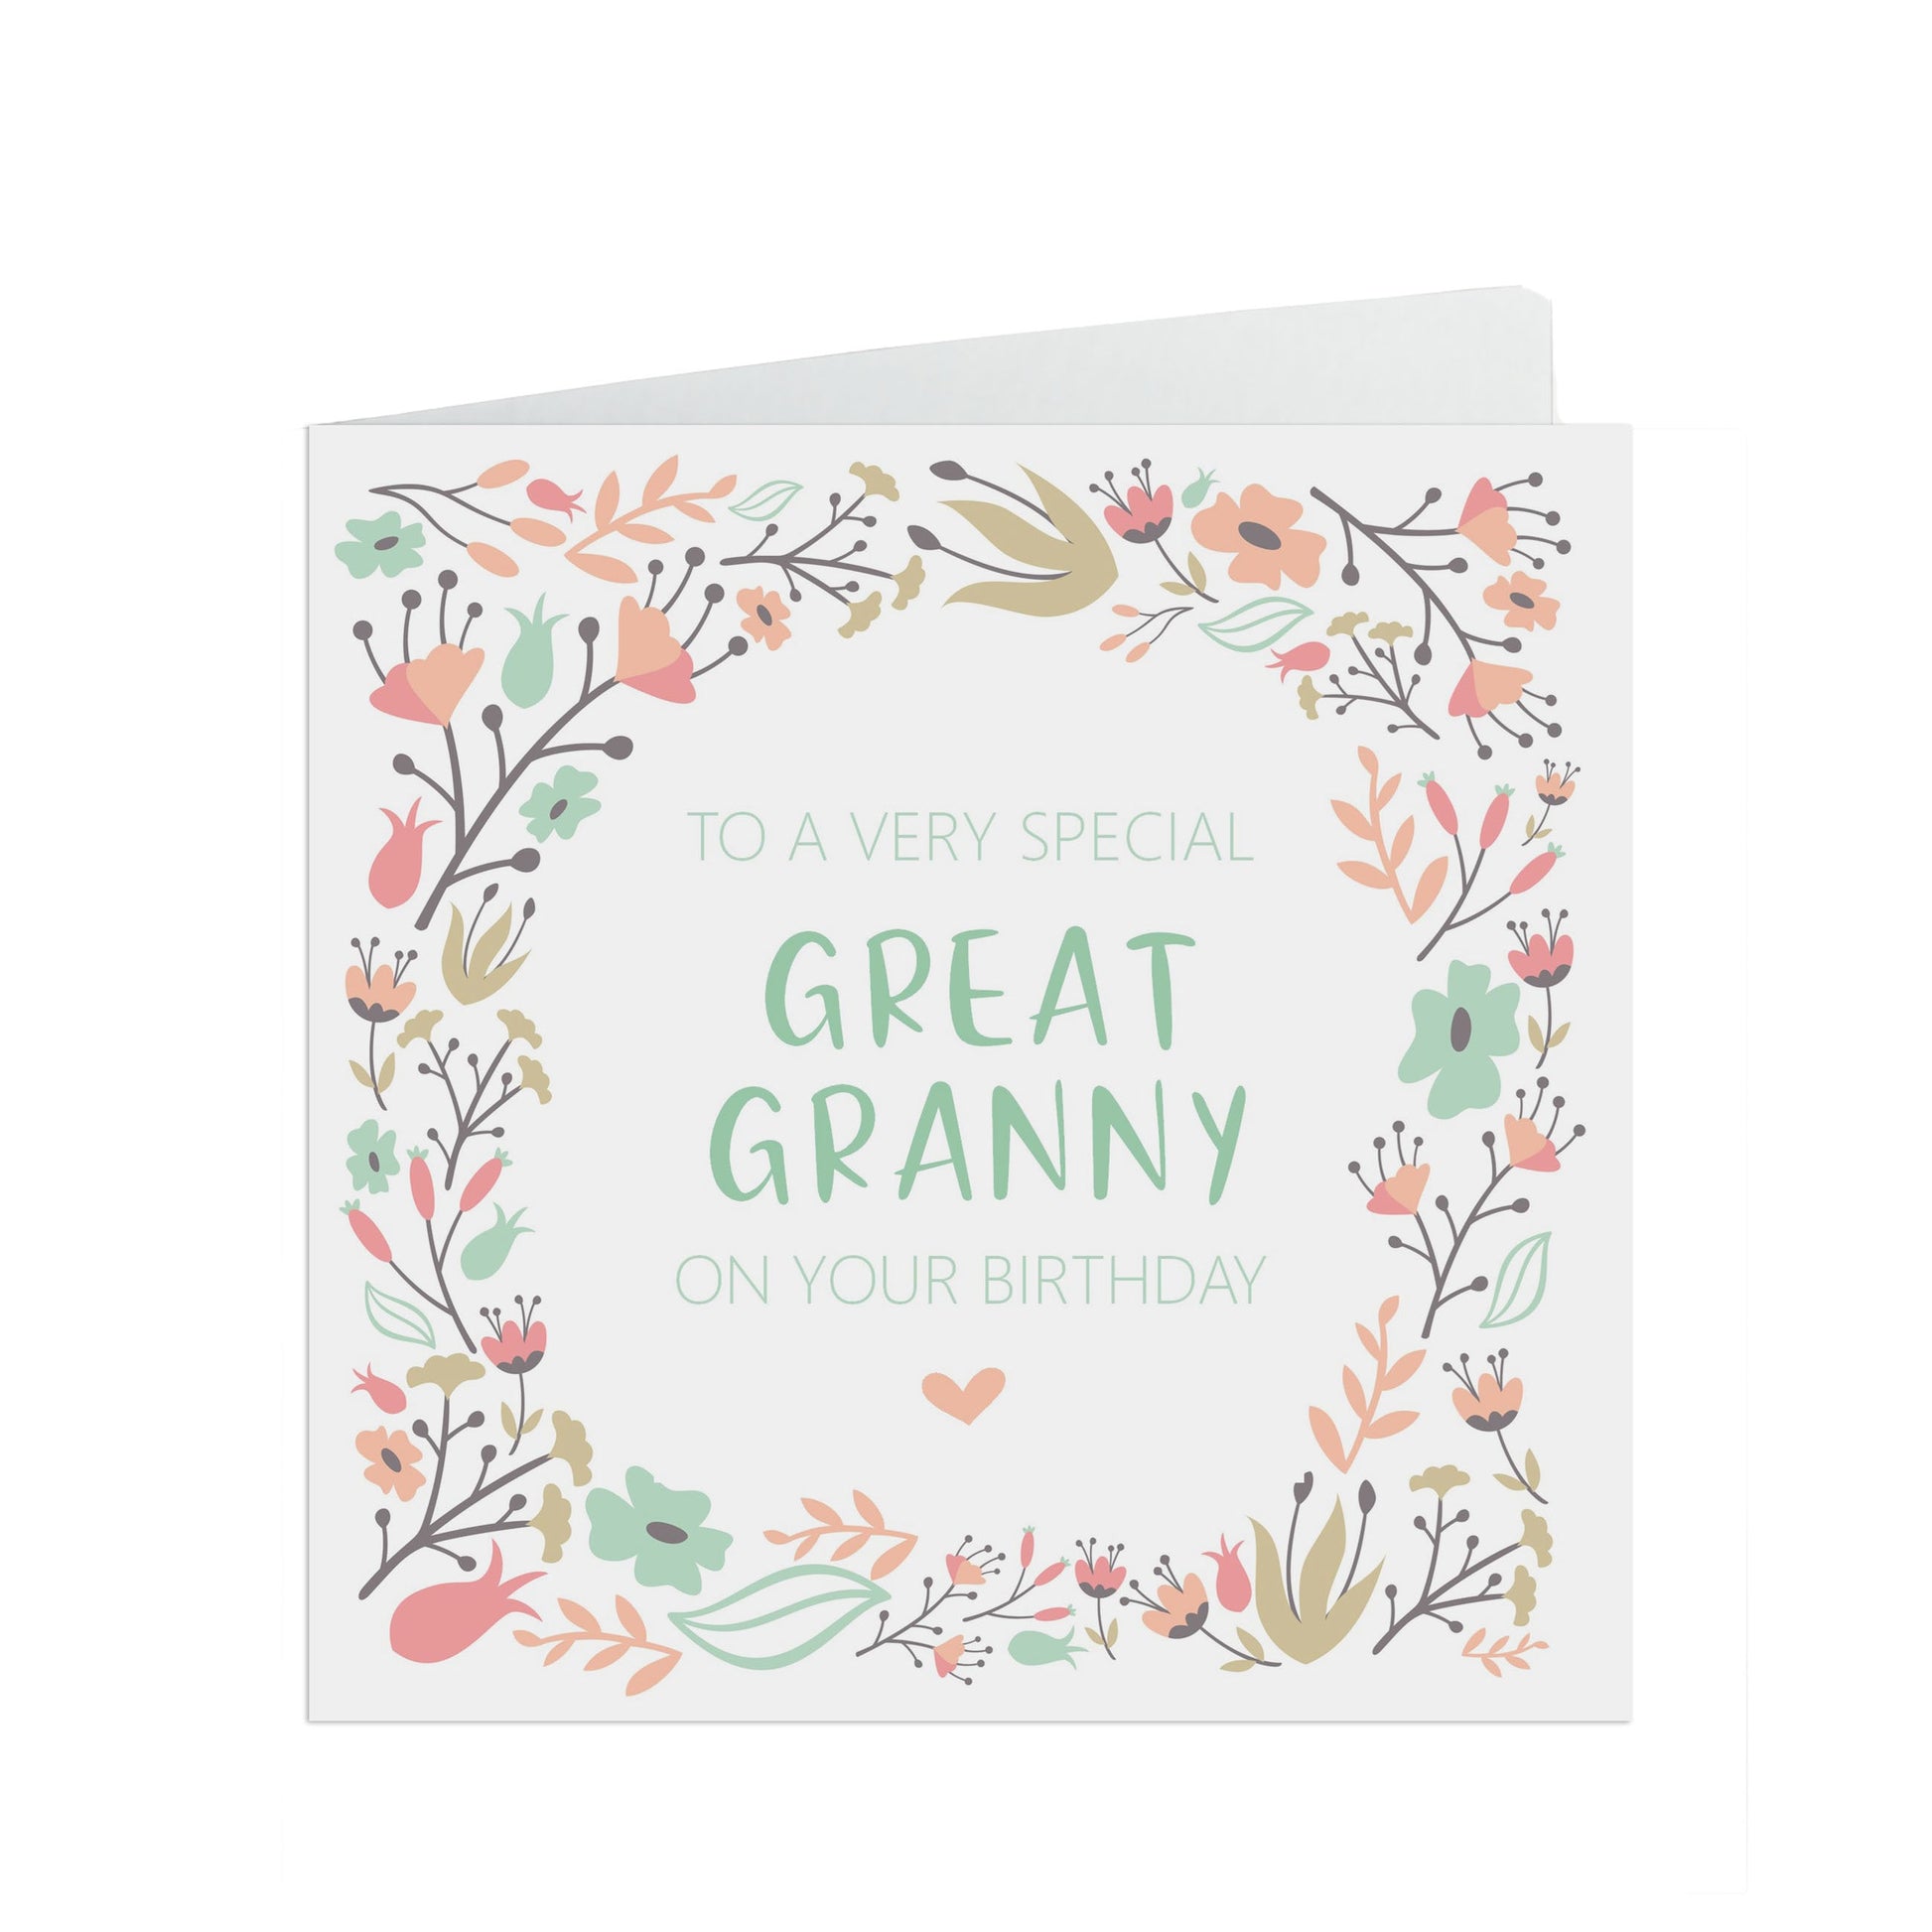 Great Granny Birthday Card, Sage & Peach Flower Design